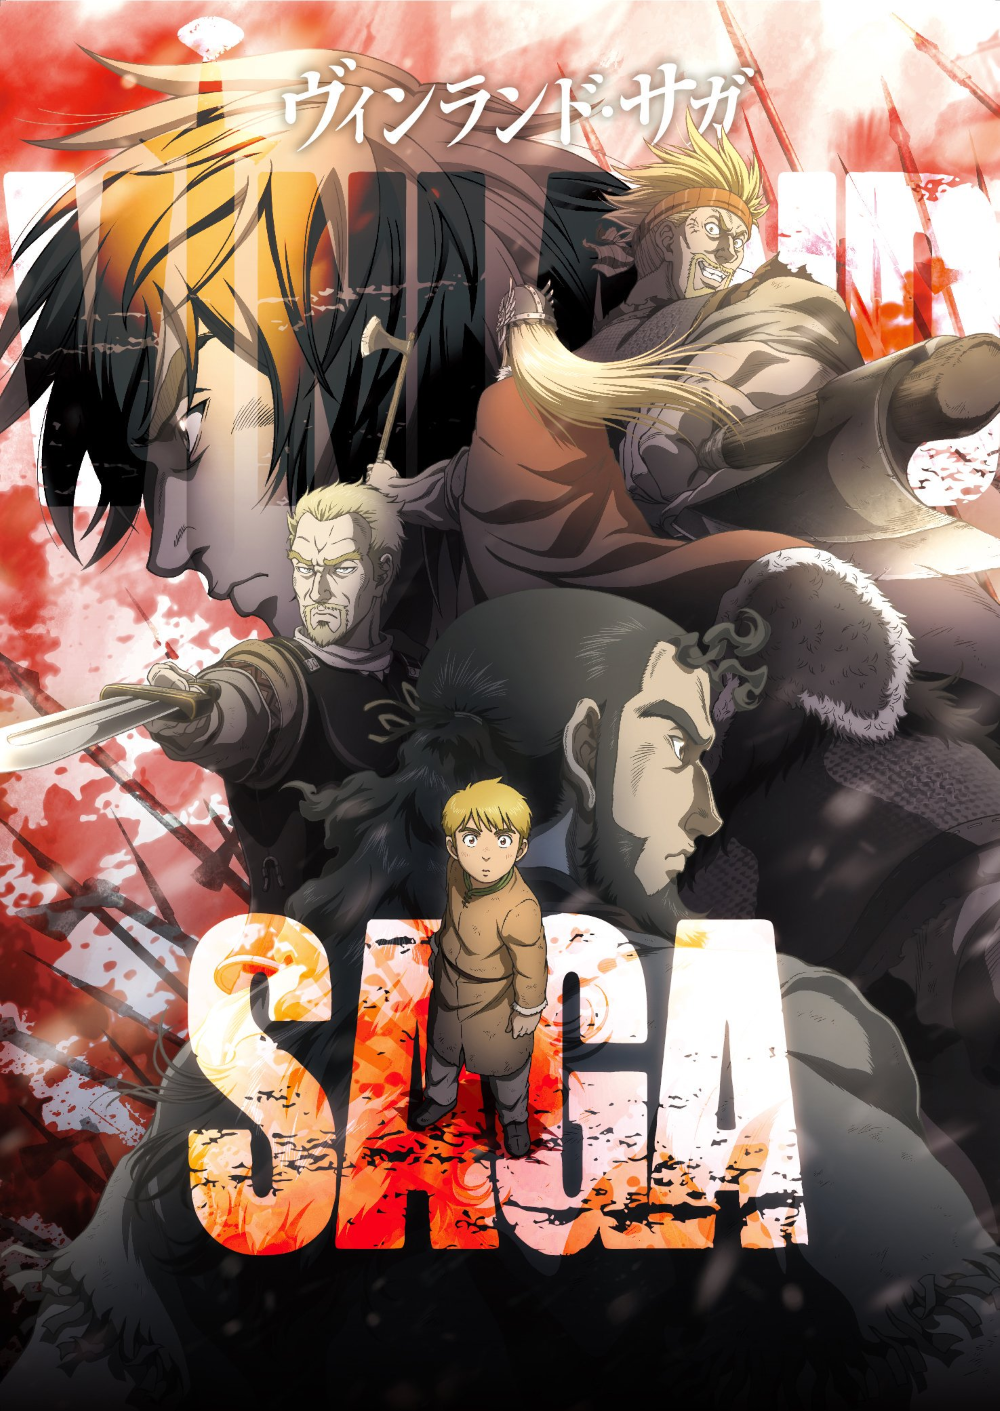 Vinland Saga anime to continue after season 2 finale